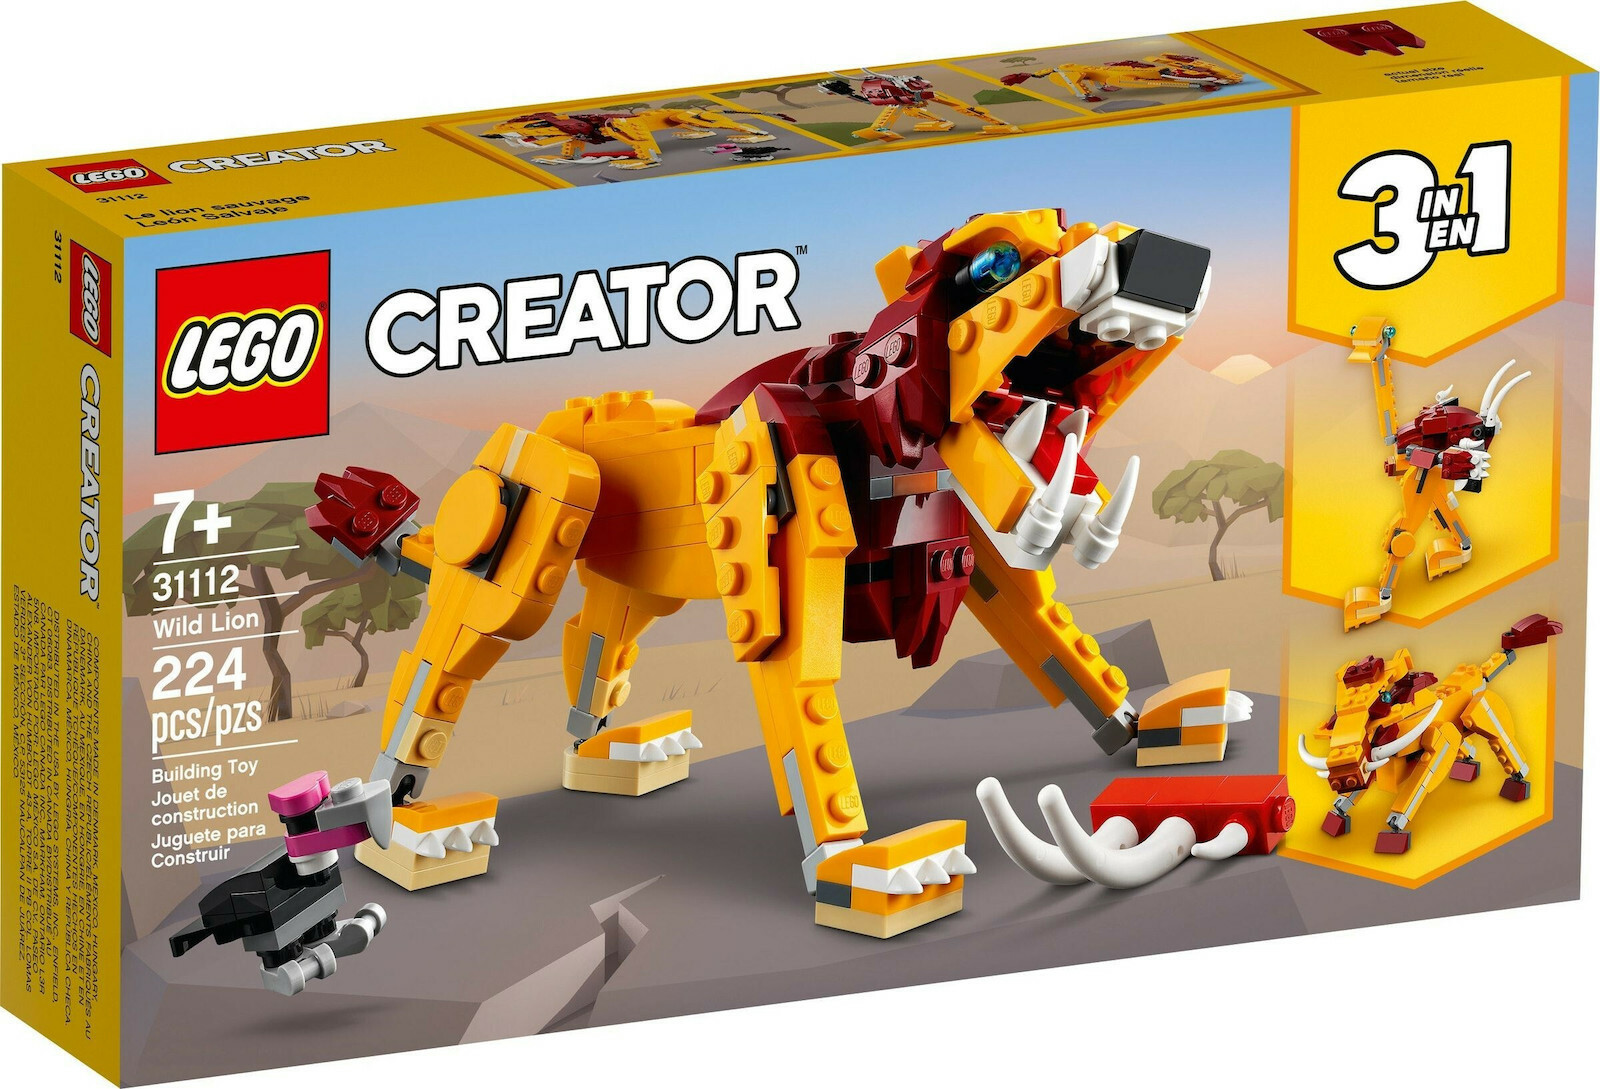 LEGO CREATOR 31112 WILD LION